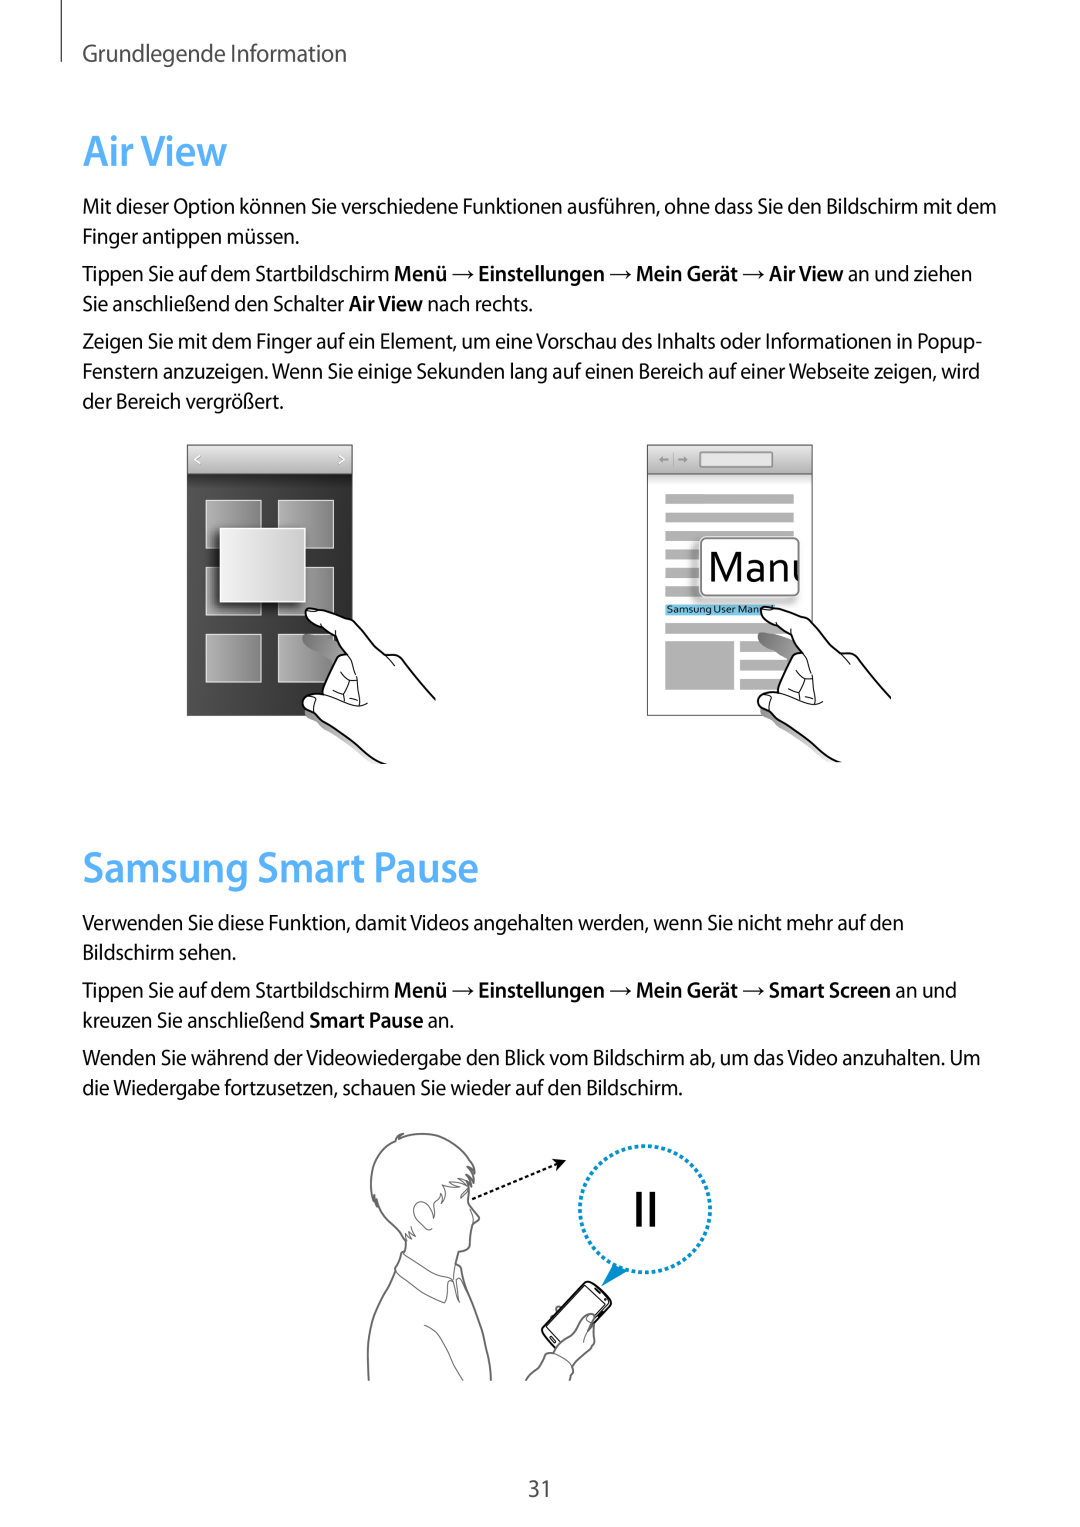 Samsung GT-I9505ZWAXEO, GT-I9505ZWAEPL, GT-I9505ZRADBT manual Air View, Samsung Smart Pause, Grundlegende Information 